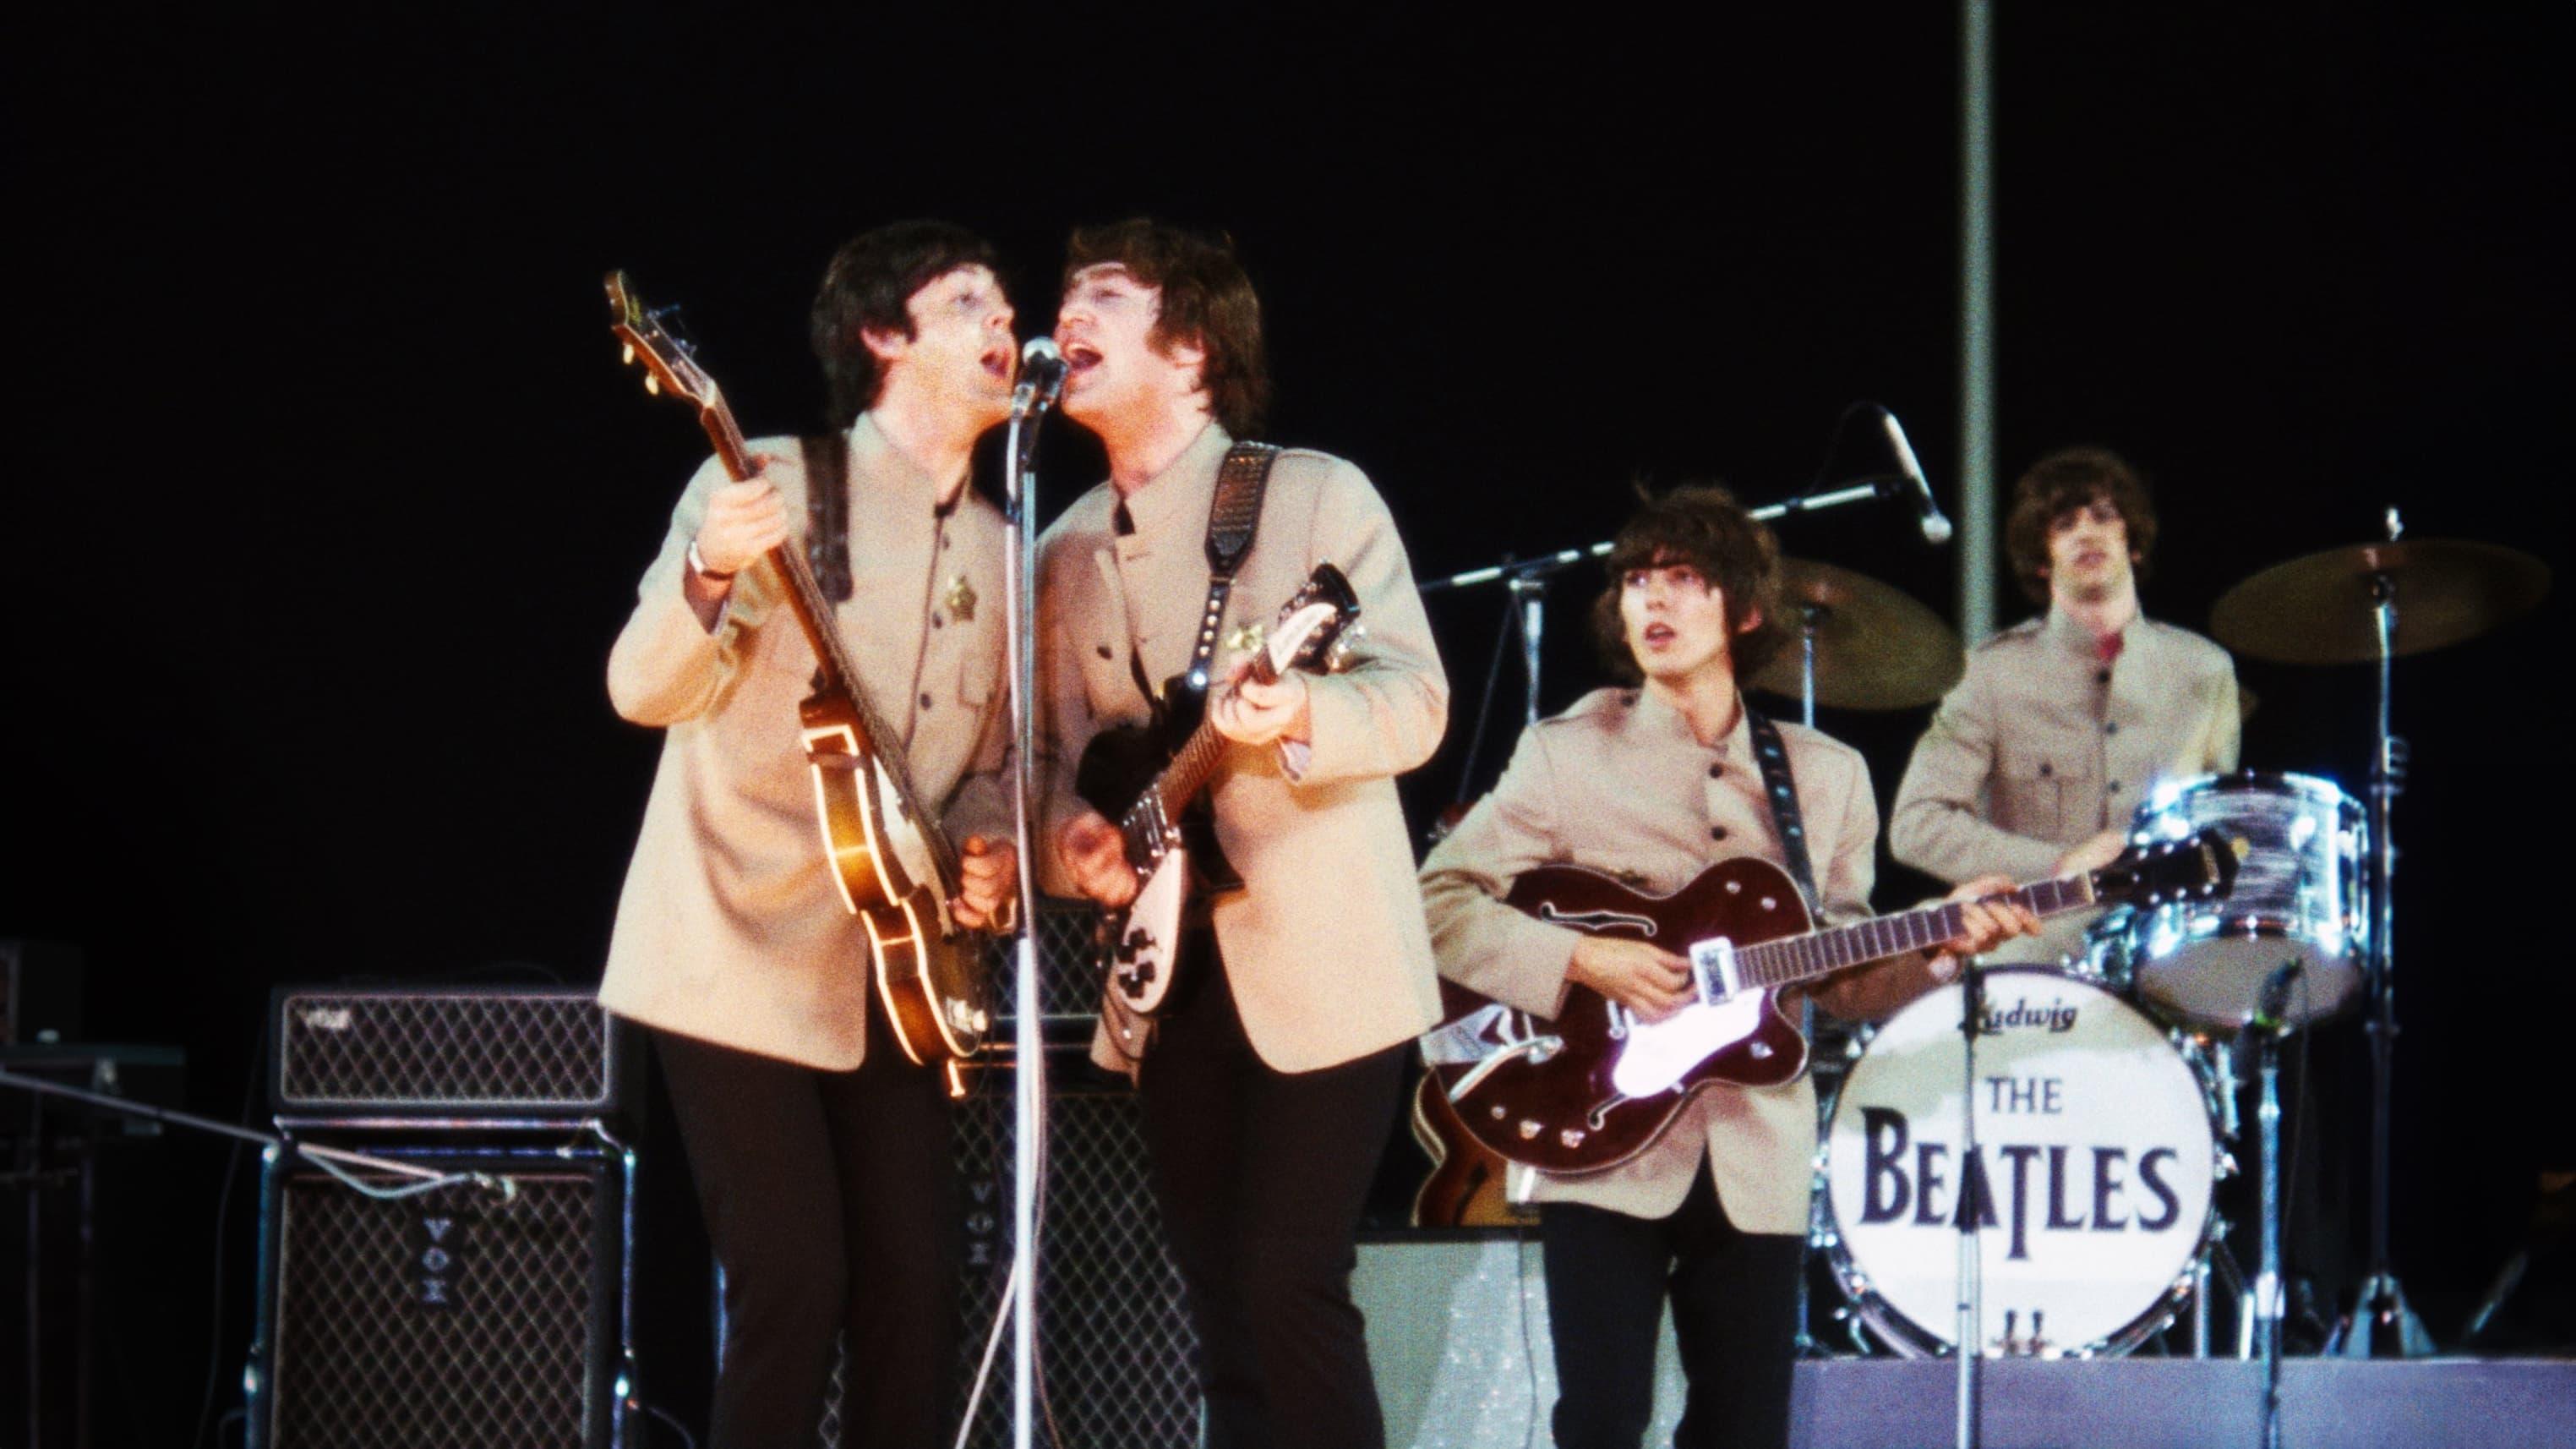 The Beatles at Shea Stadium backdrop